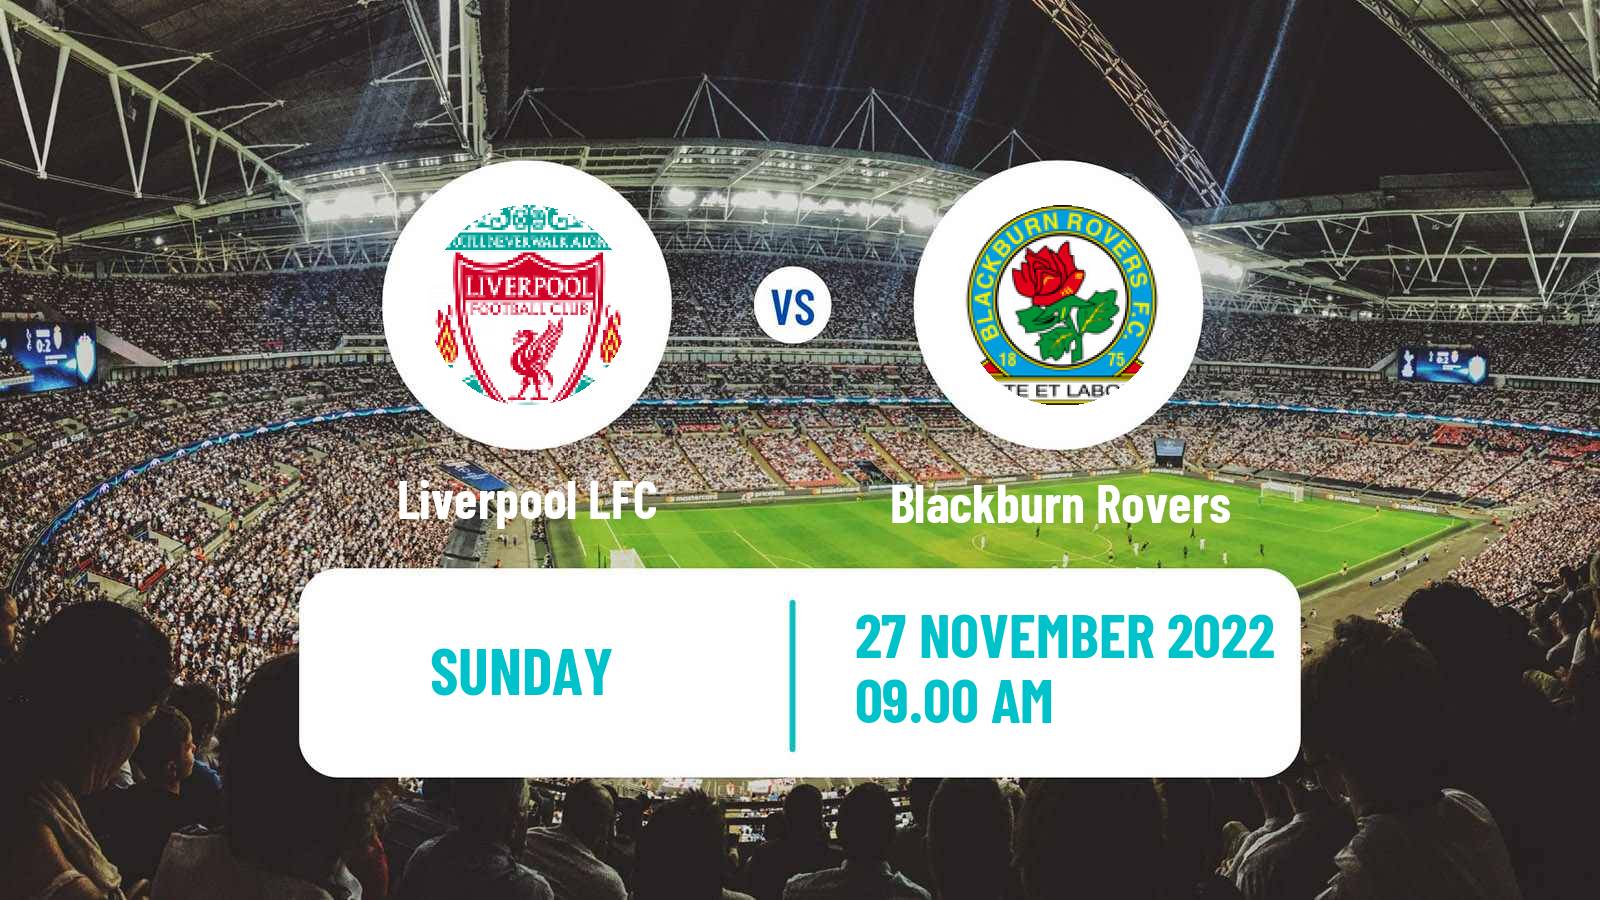 Soccer English League Cup Women Liverpool LFC - Blackburn Rovers